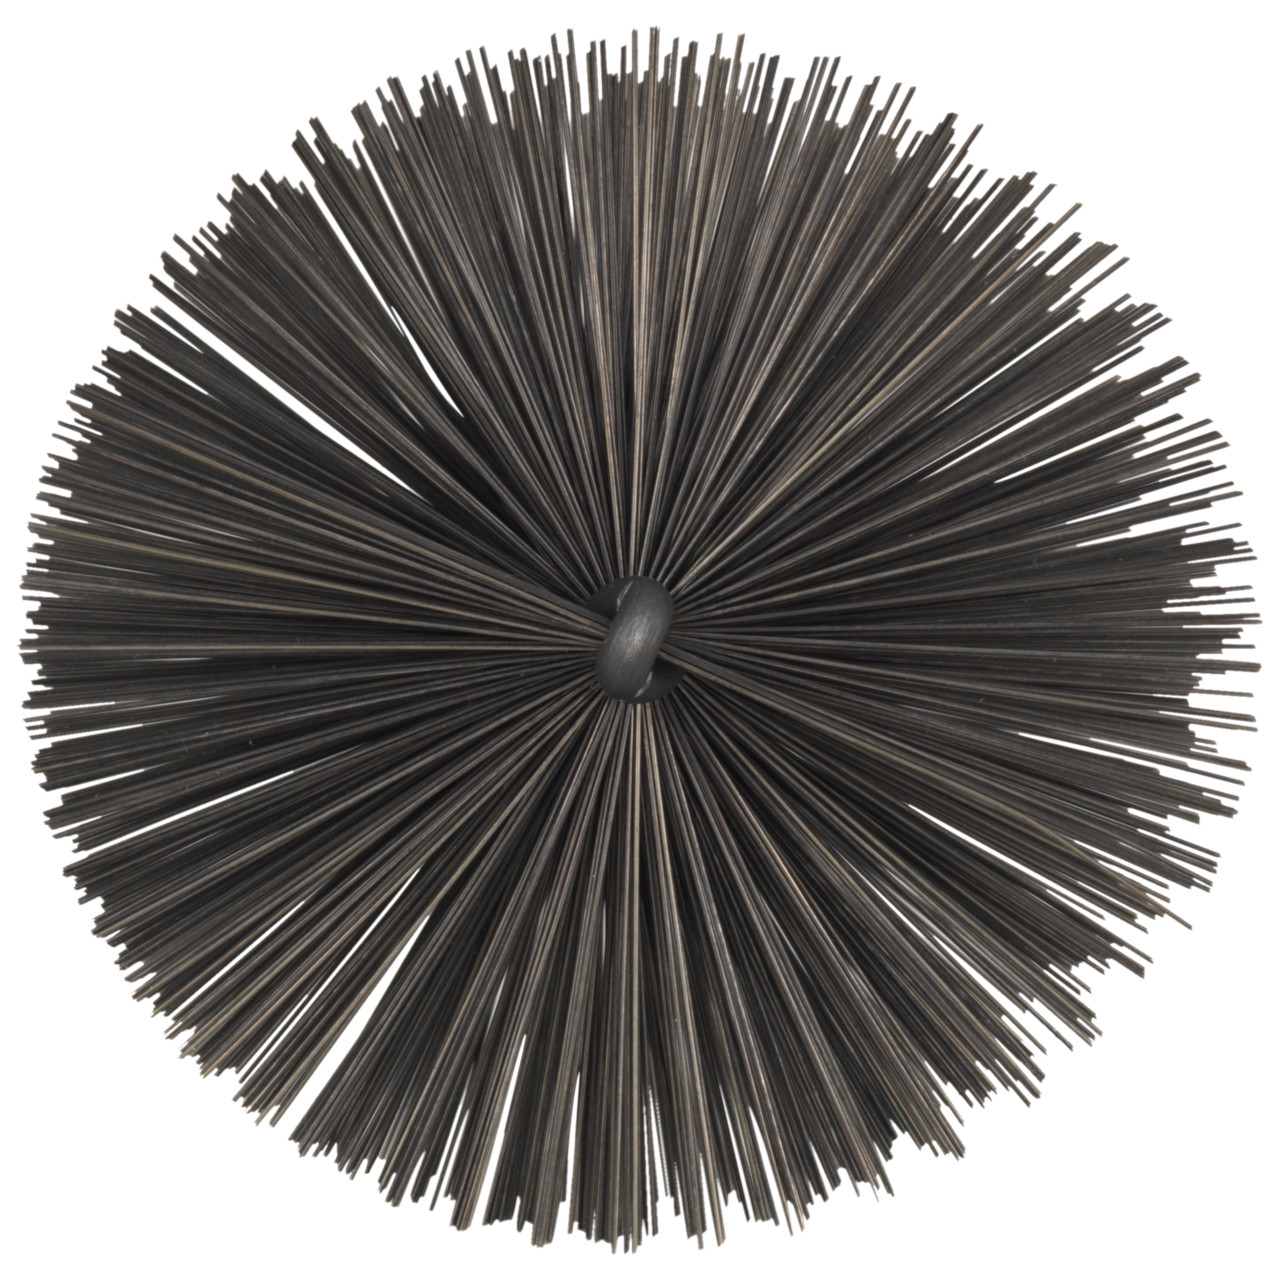 Tyrolit Buisborstel met buitendraad DxGE-I 50xB1/2-160 Voor staal, vorm: 18ROGDG - (buisborstel), Art. 34203605